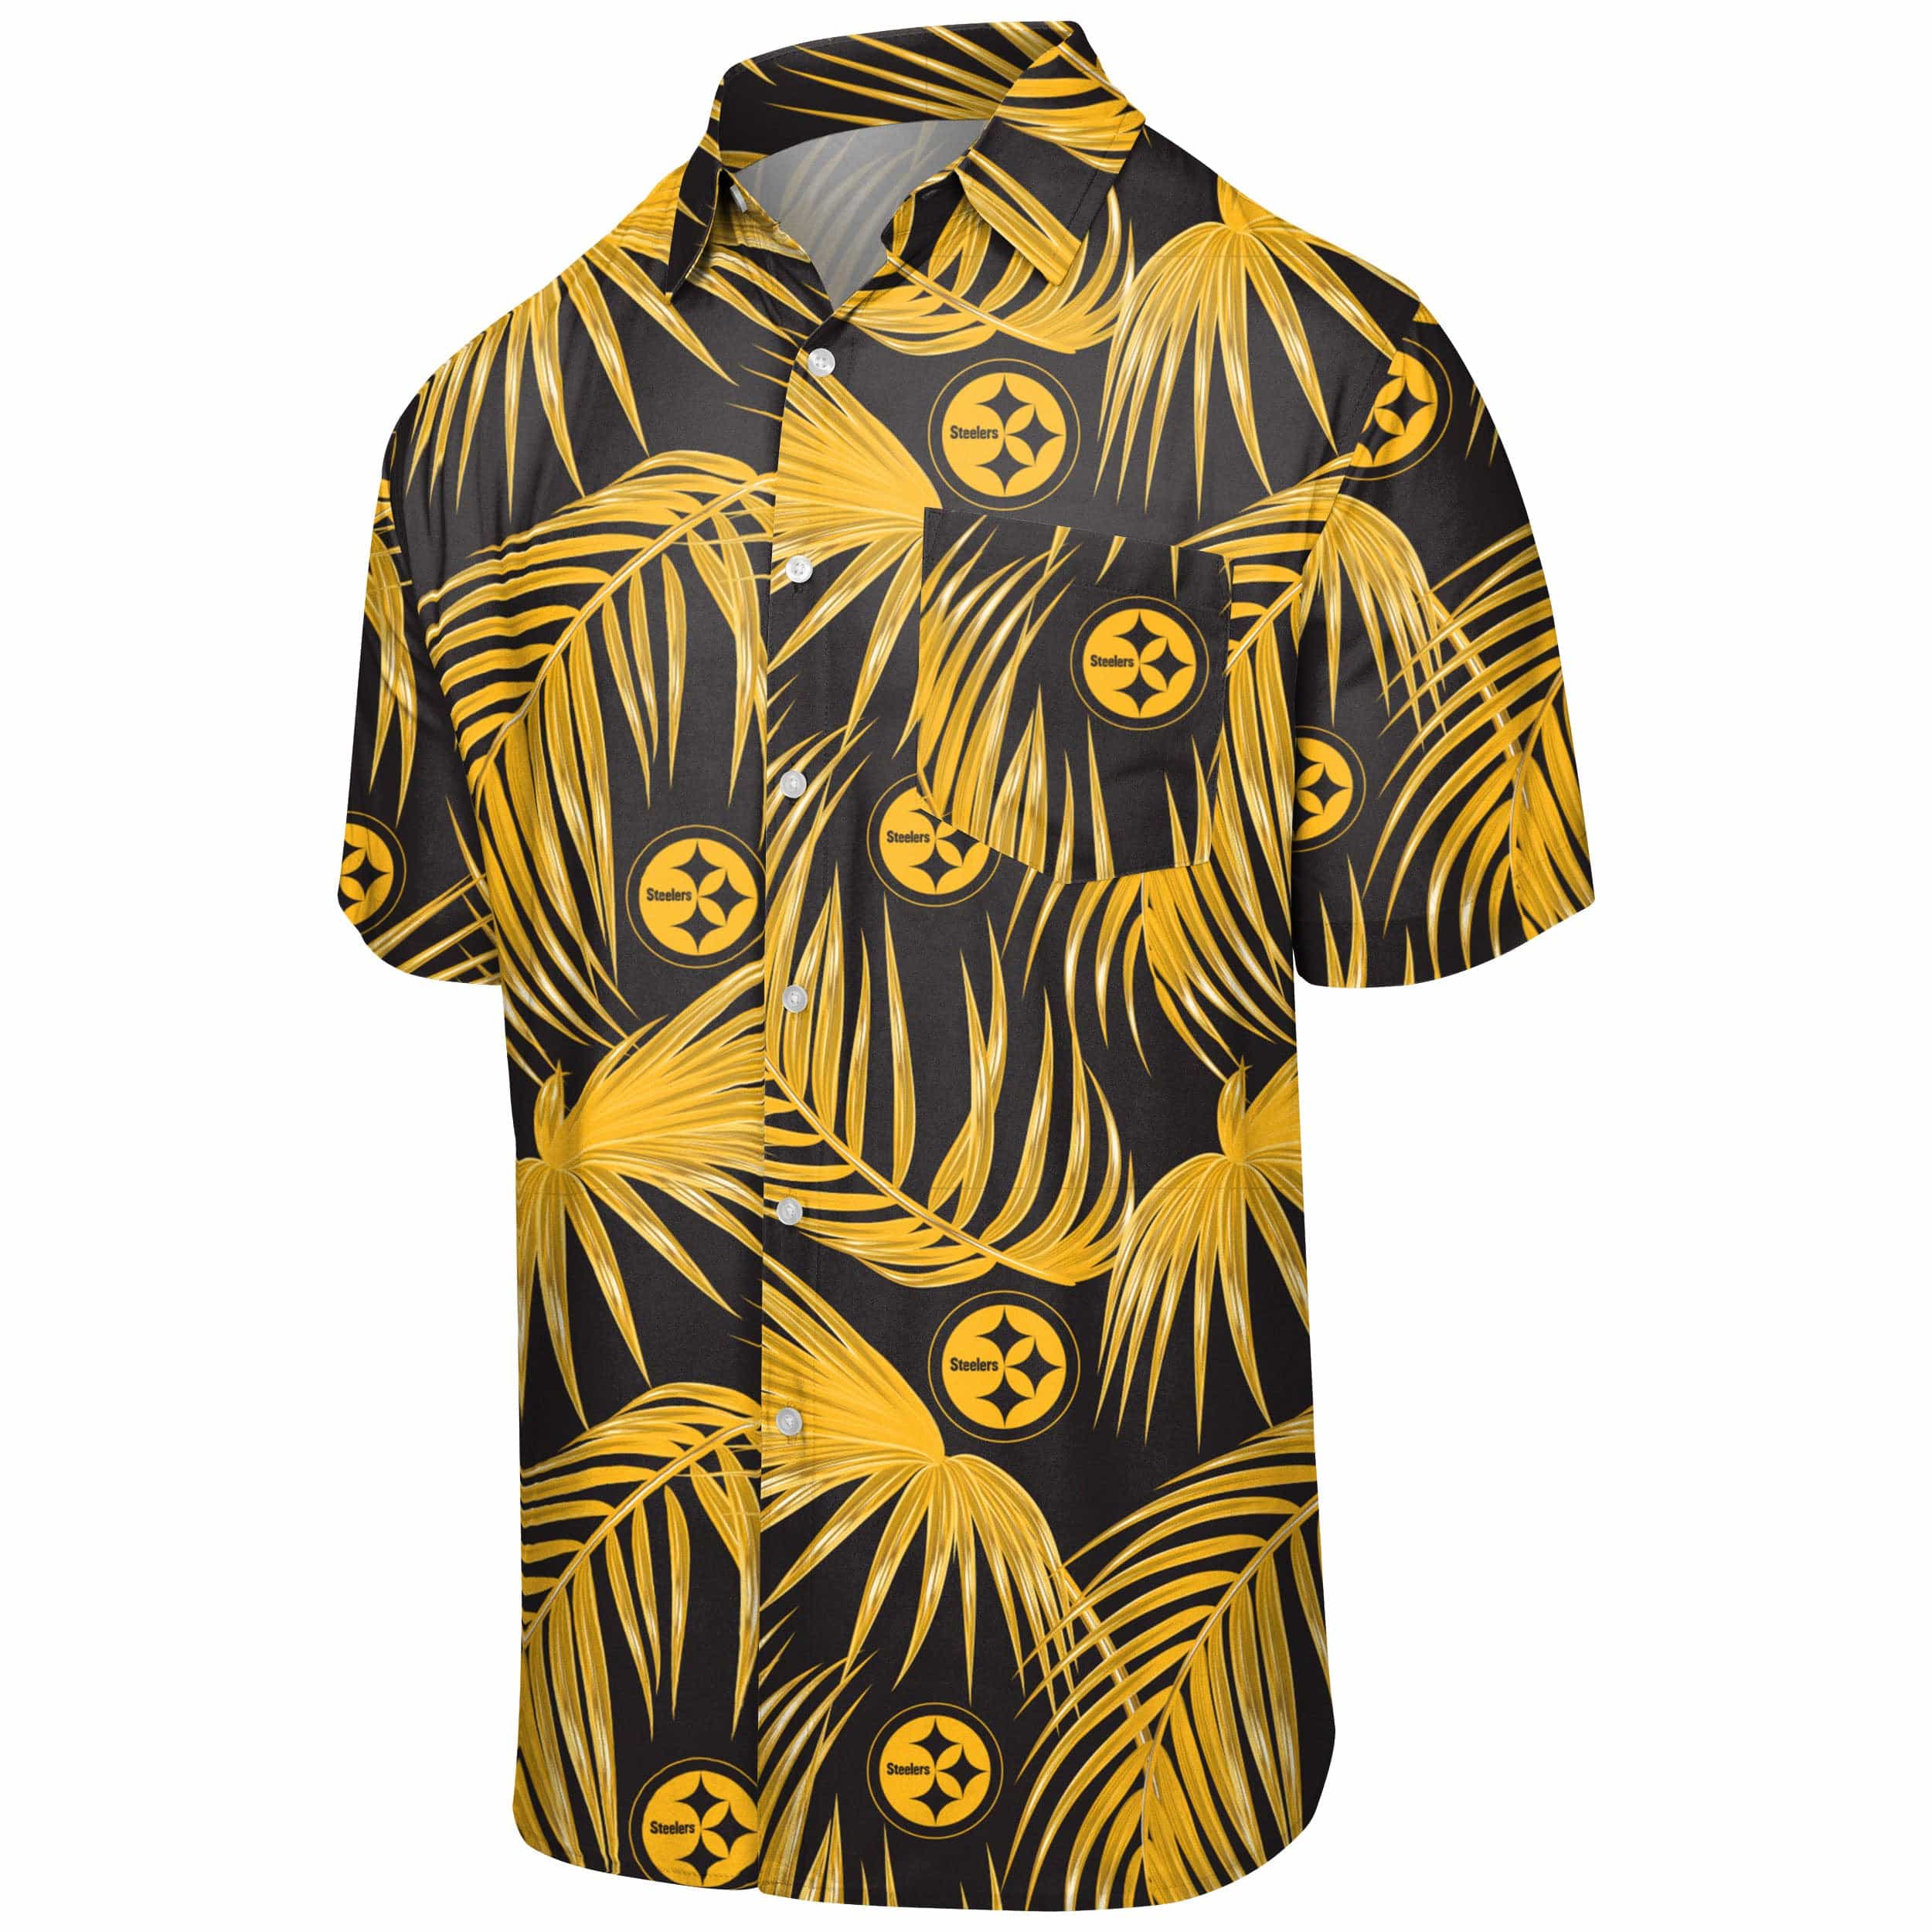 FOCO Pittsburgh Steelers NFL Mens Hawaiian Button Up Shirt - S